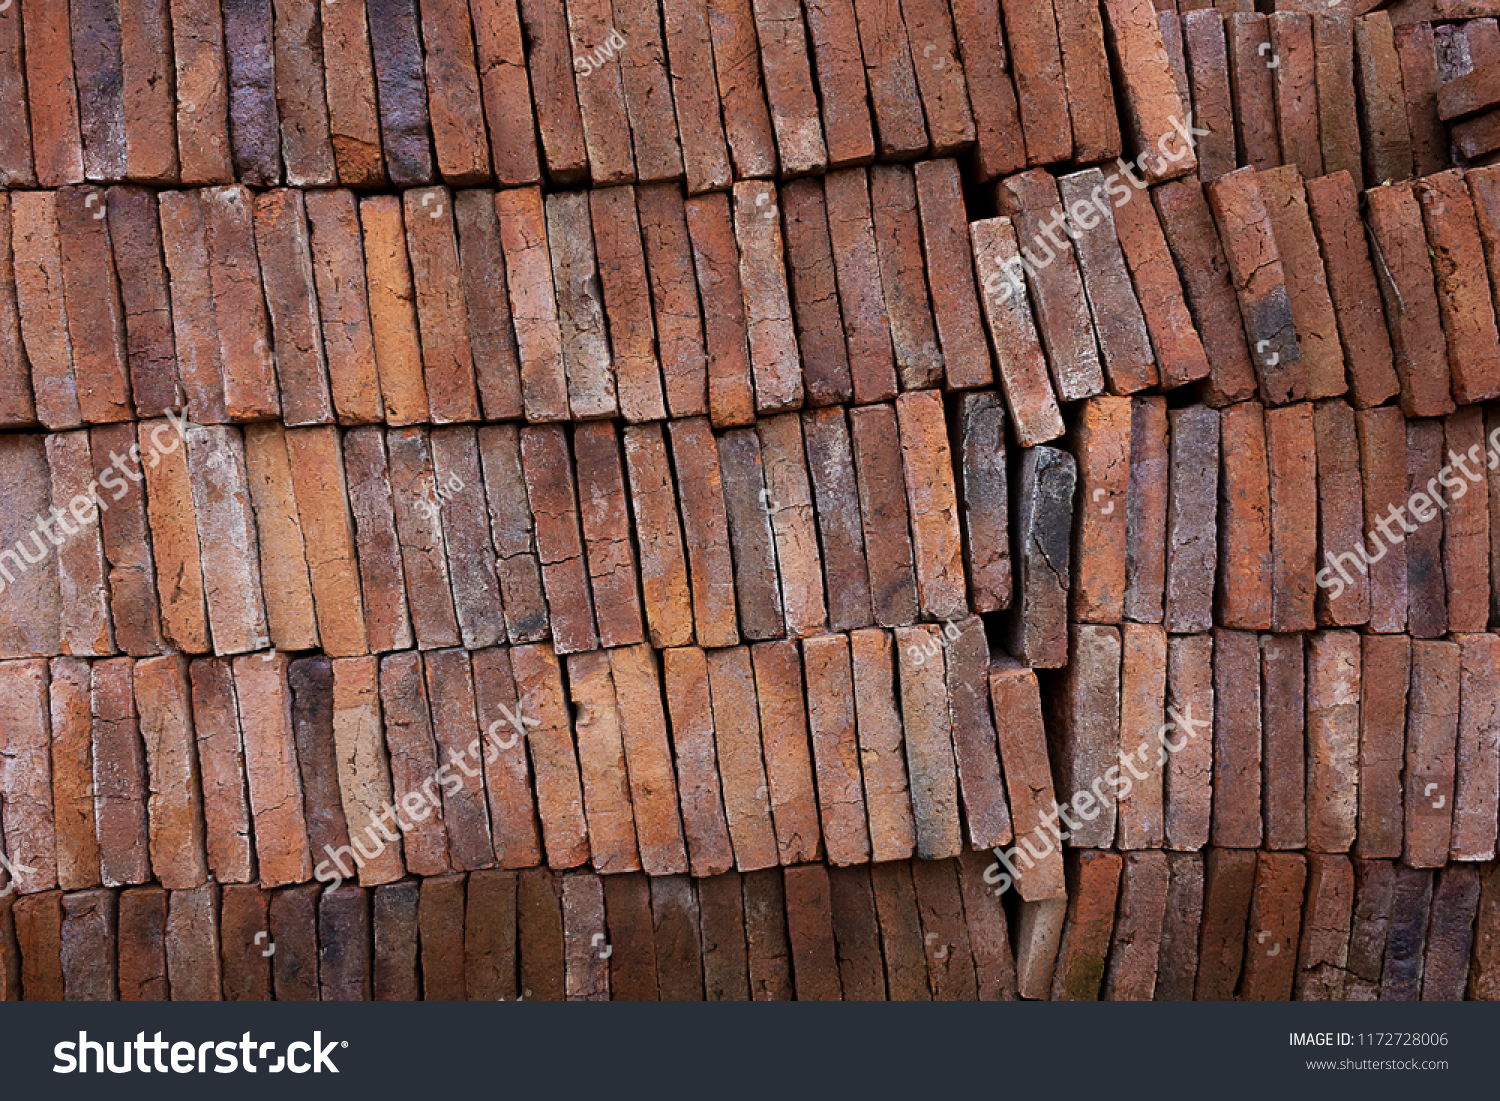 Brick overlap pattern,Stacked brick,Brick texture,Brick for construction. #1172728006